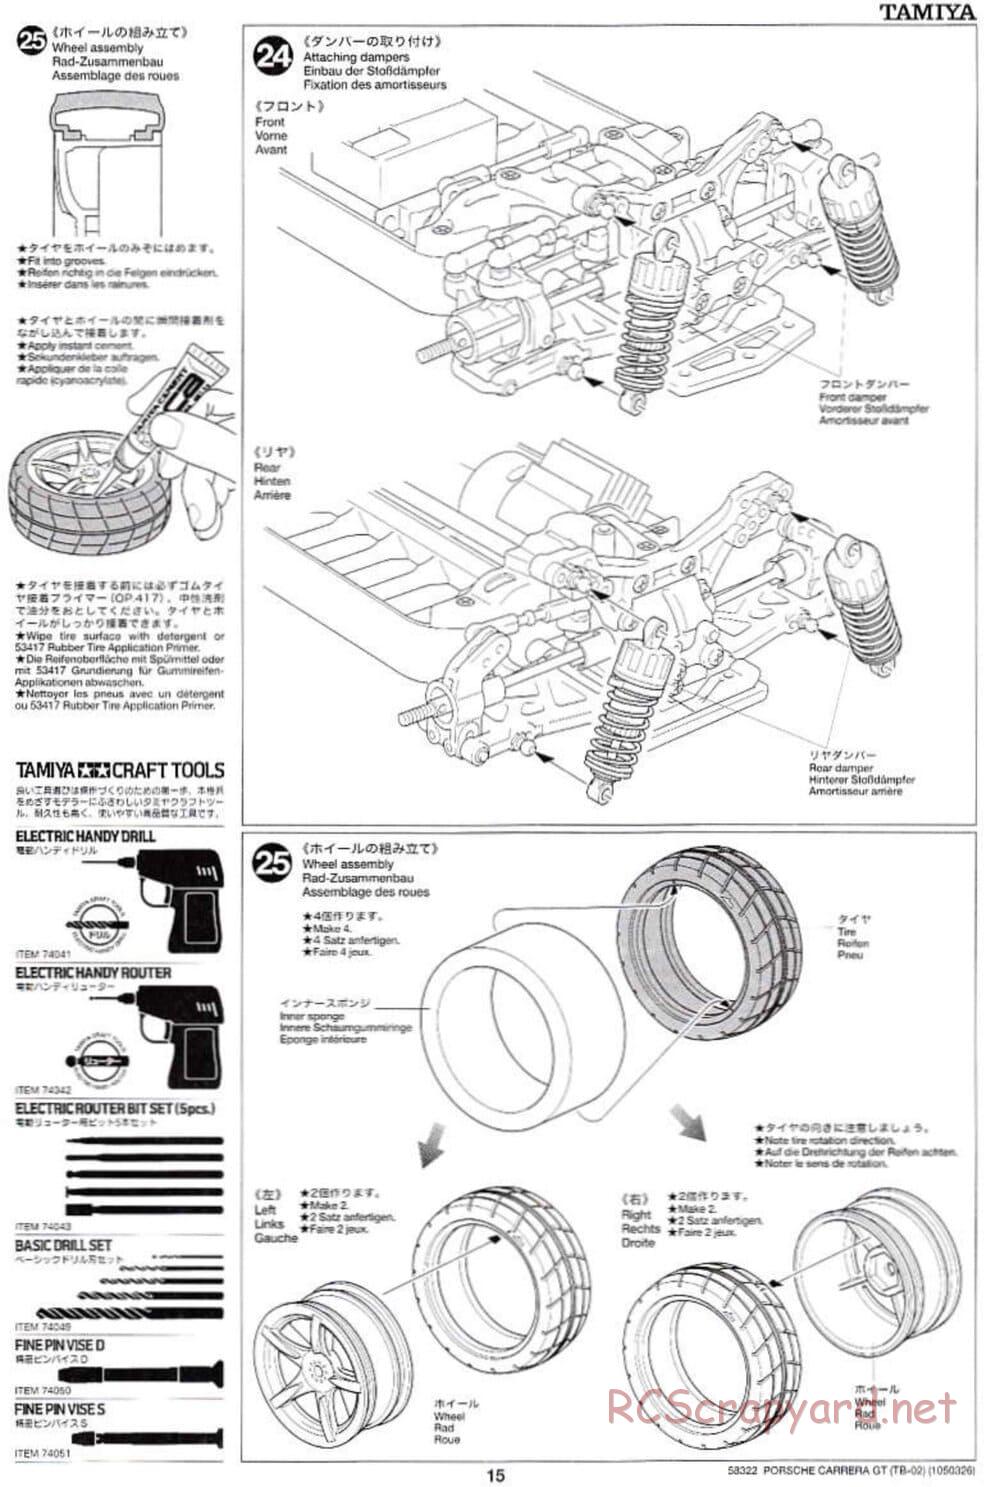 Tamiya - Porsche Carrera GT - TB-02 Chassis - Manual - Page 15